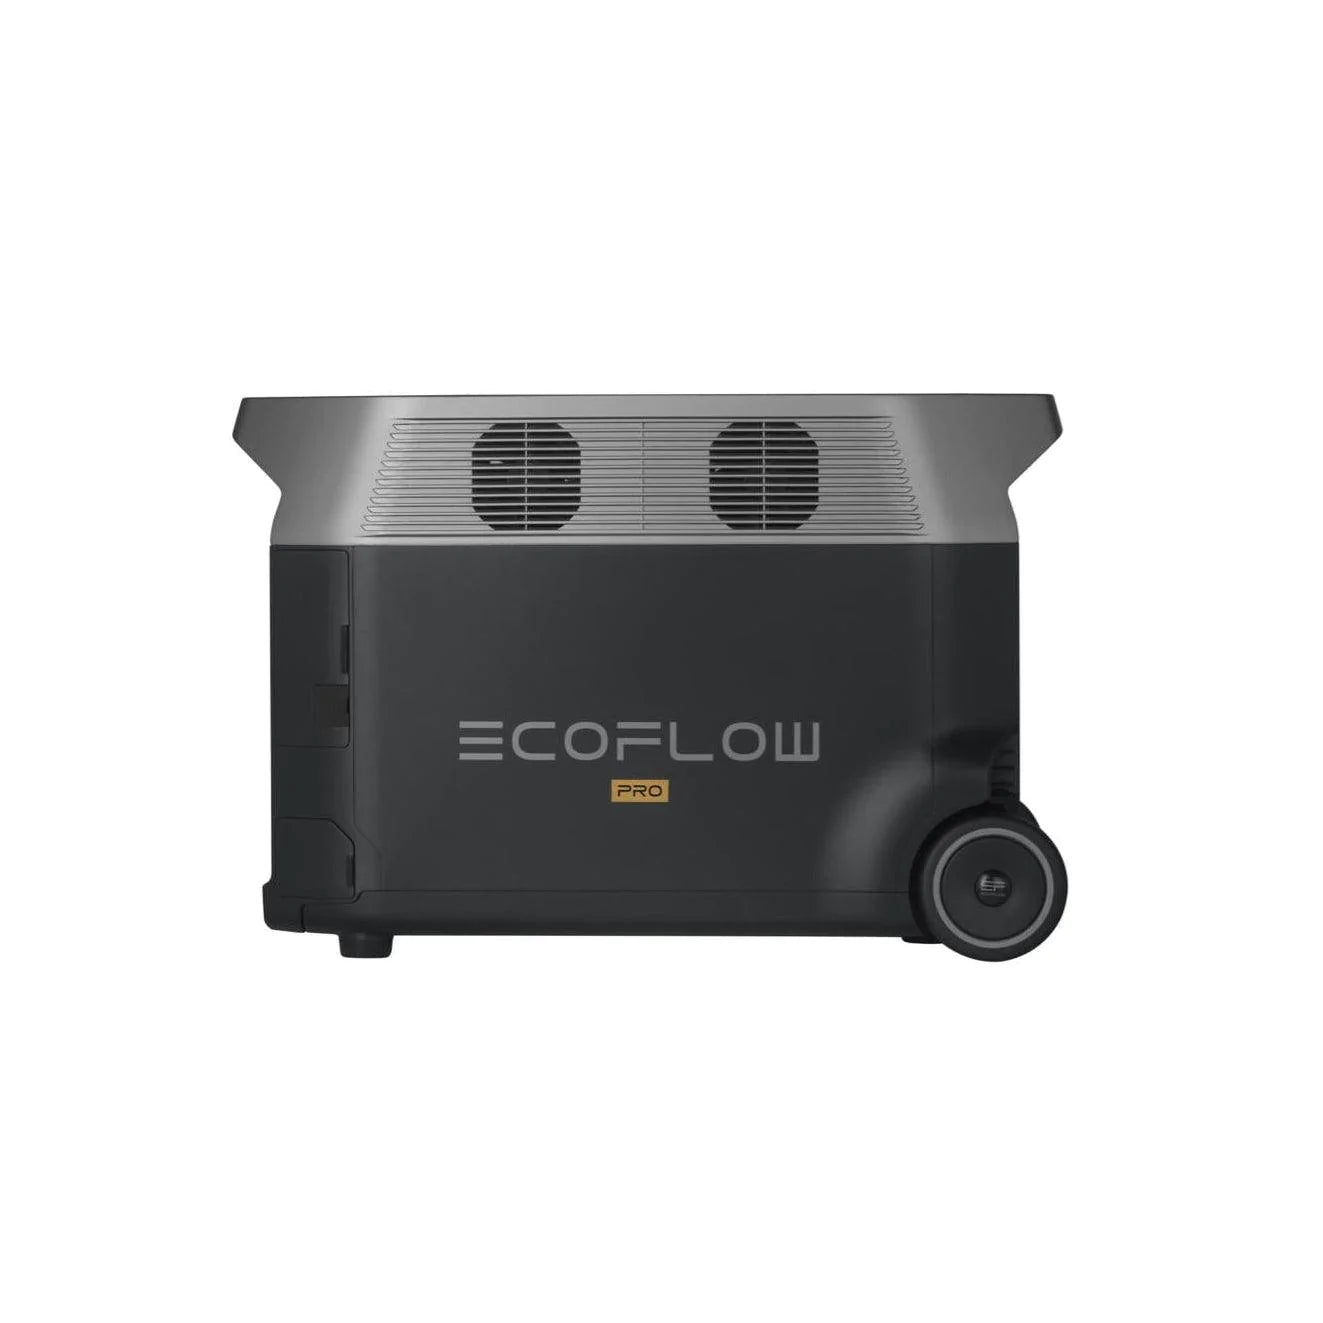 EcoFlow EcoFlow DELTA PRO+Smart Battery+400W Solar Panel+Remote Control Bundle - eBike Haul